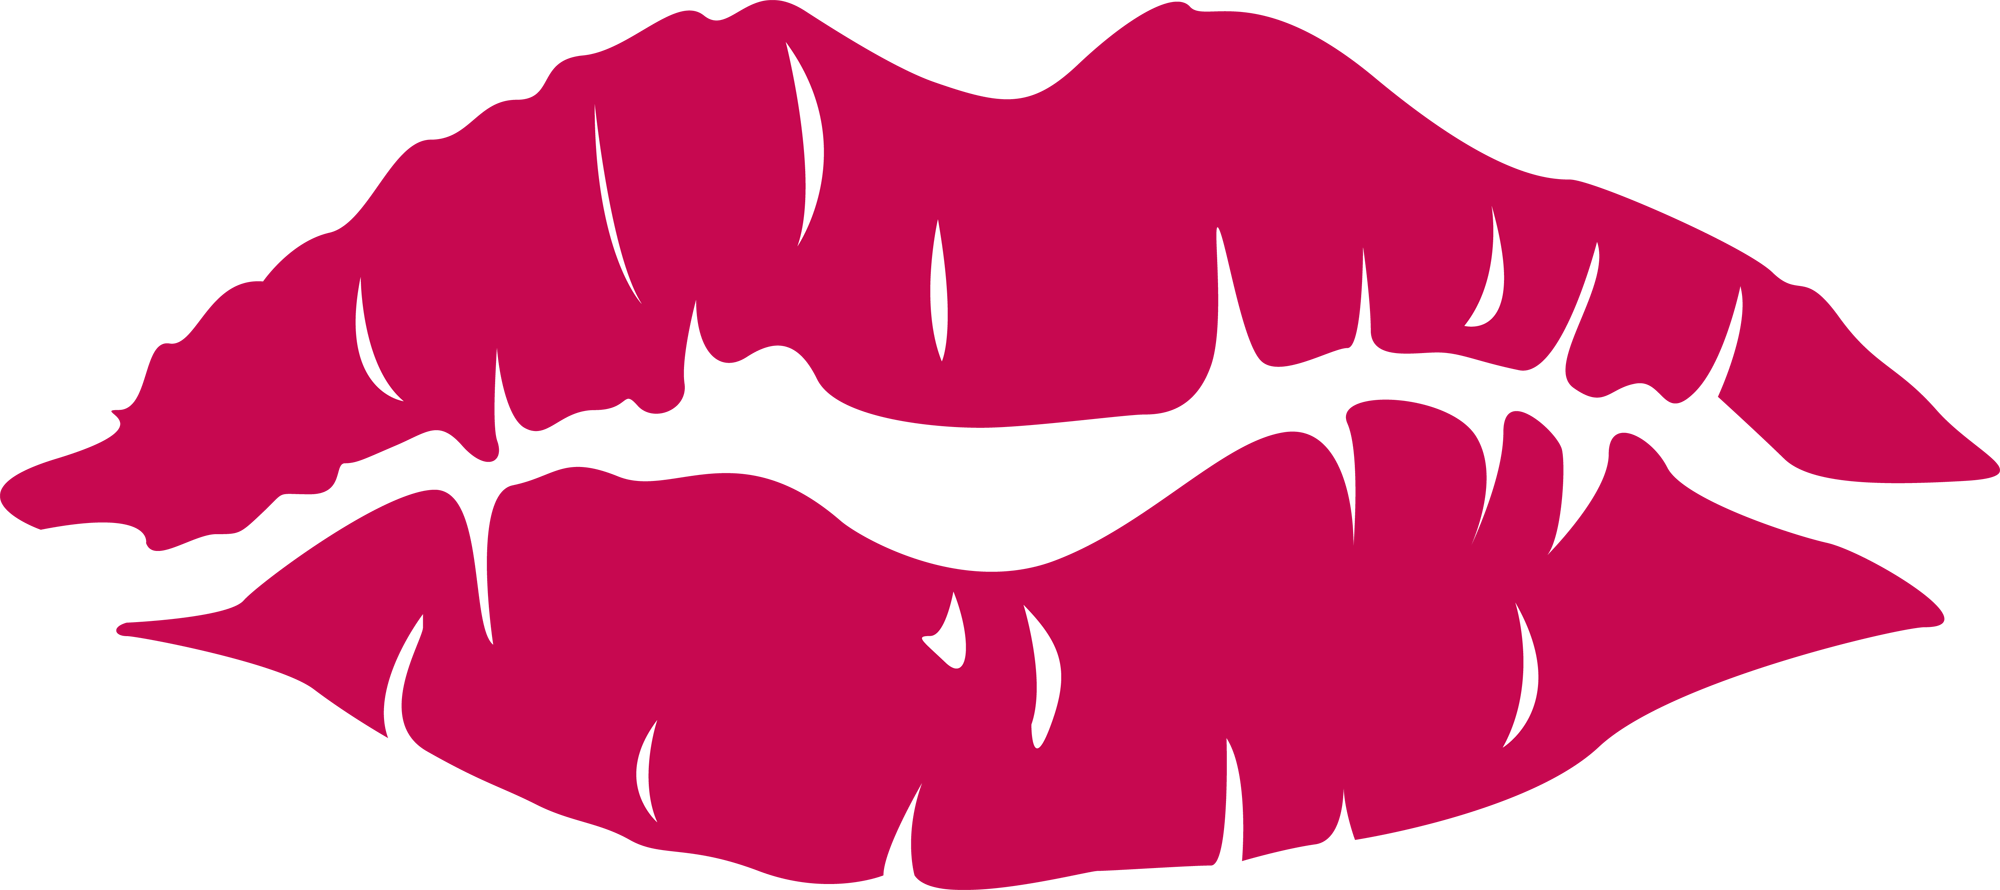 Free Cartoon Lips Kiss, Download Free Clip Art, Free Clip